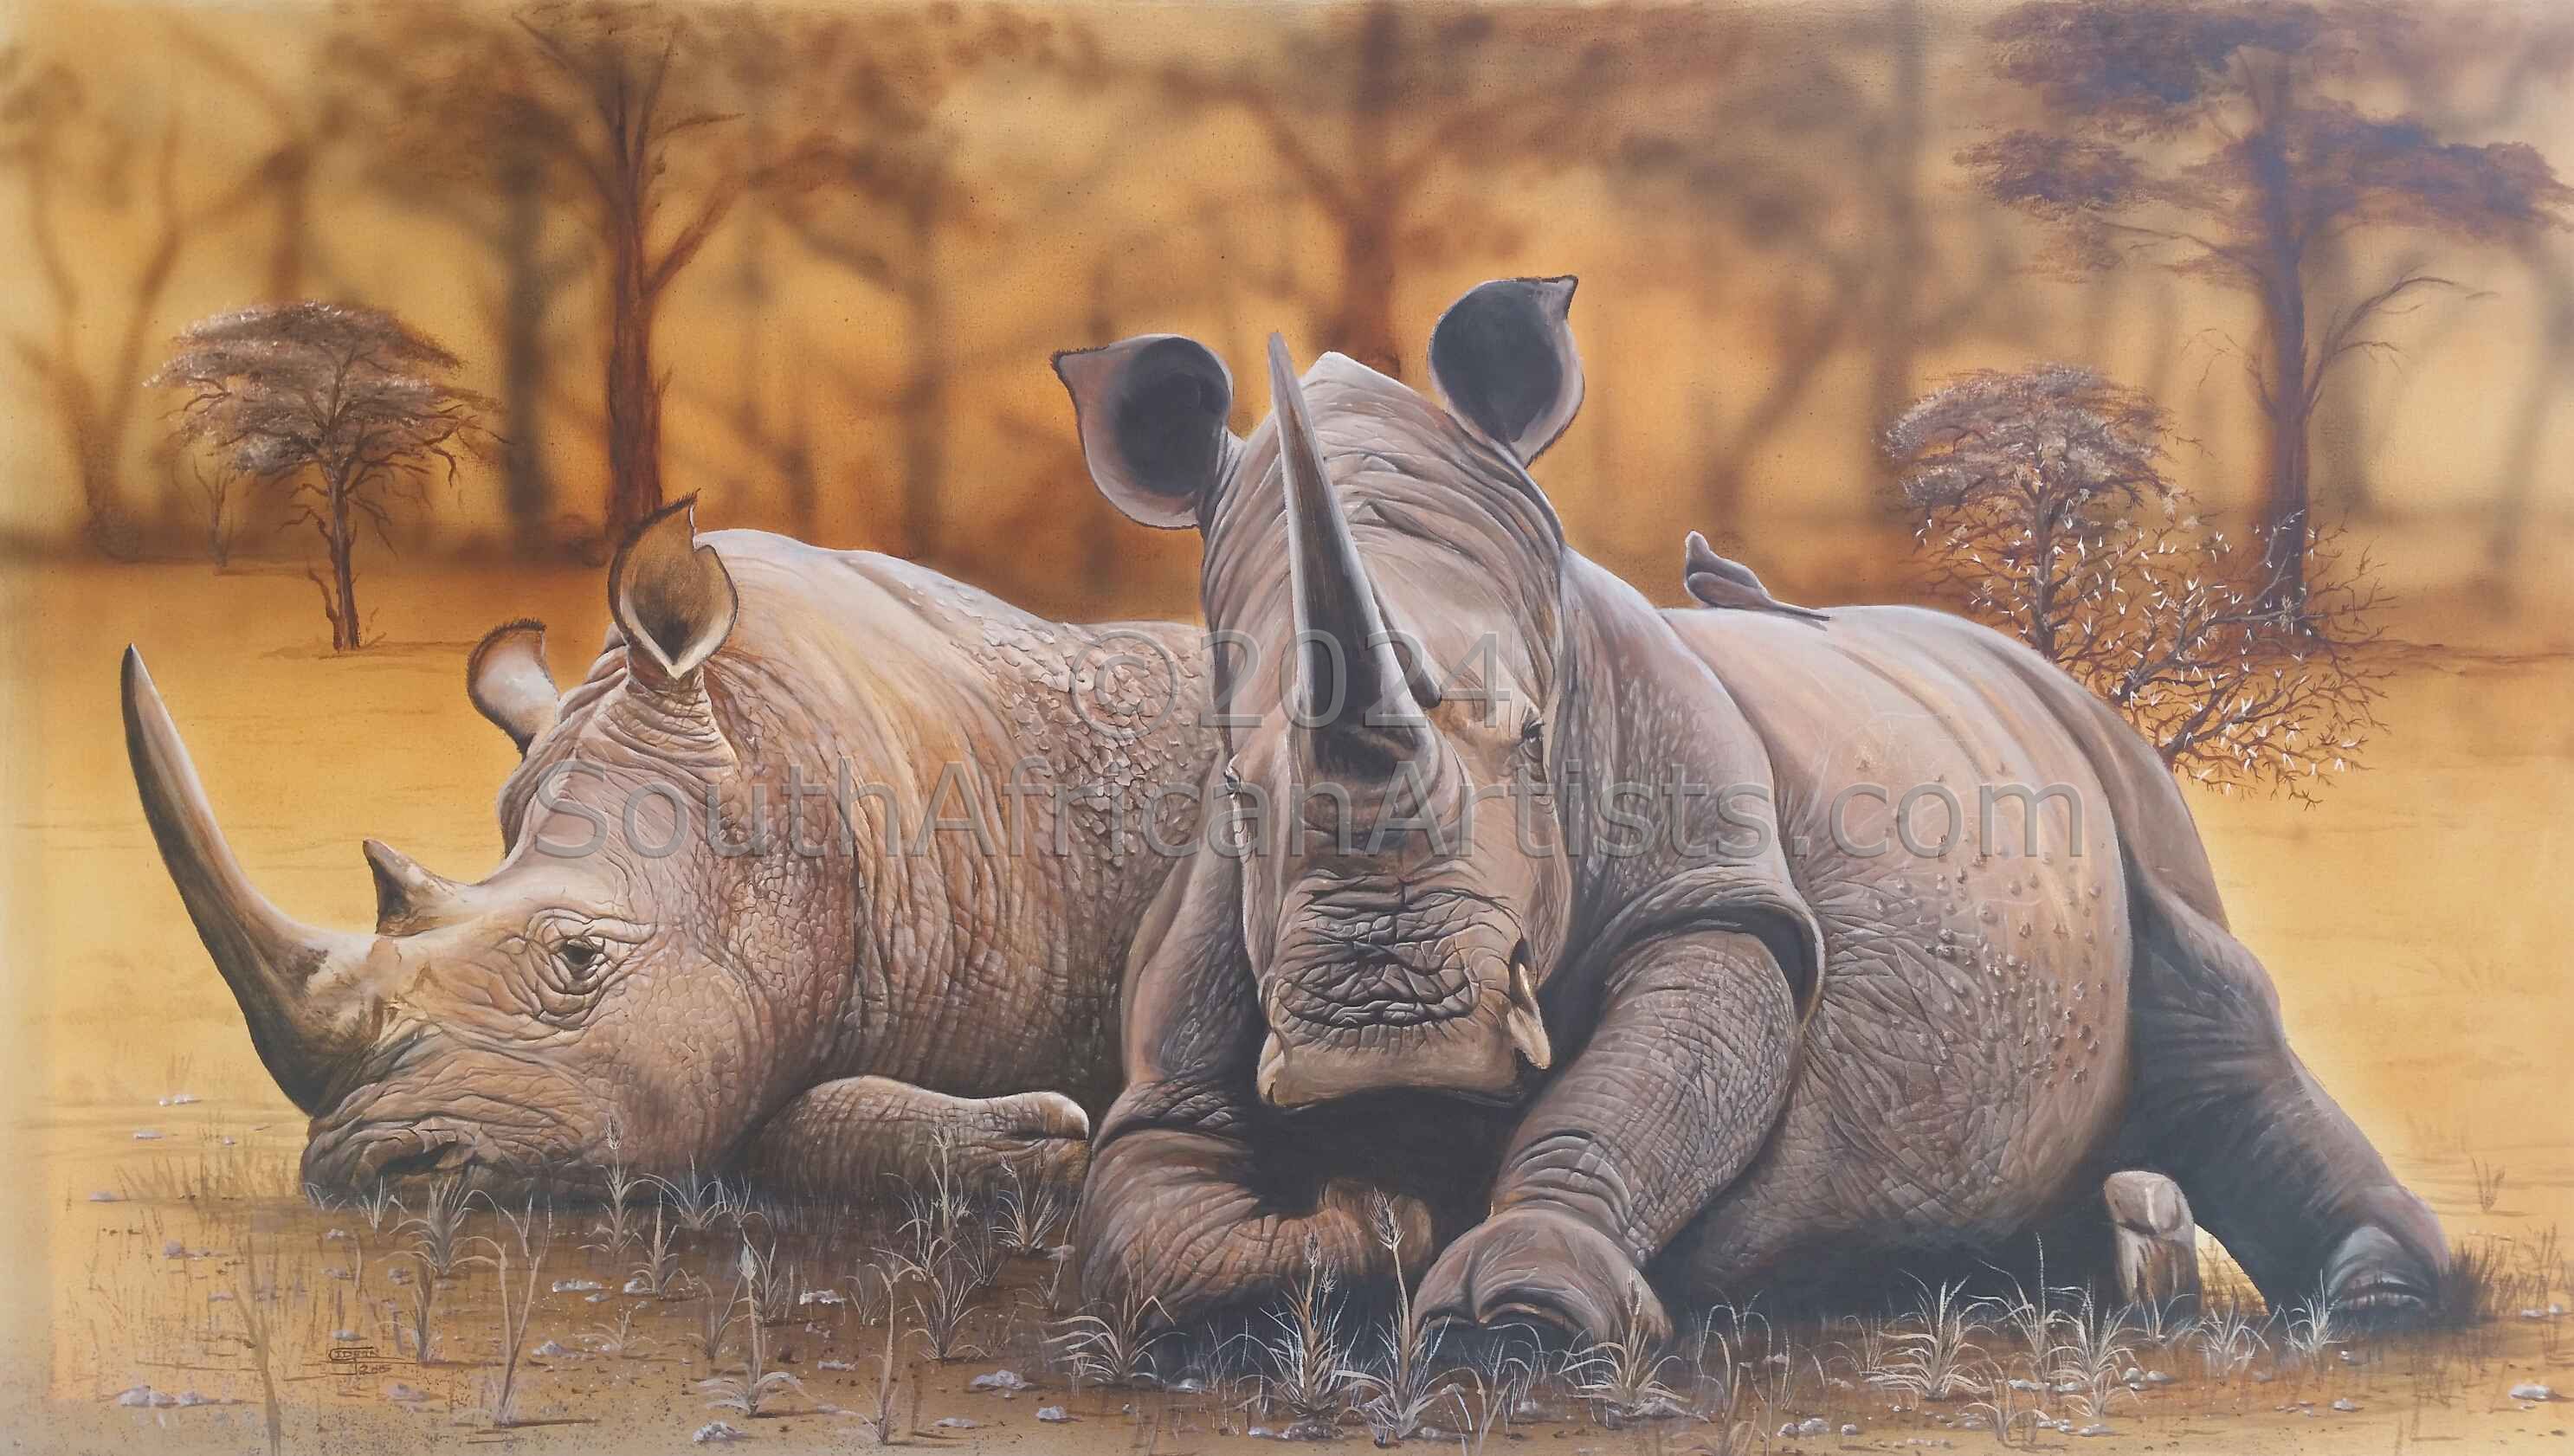 Rhinos in Sepia